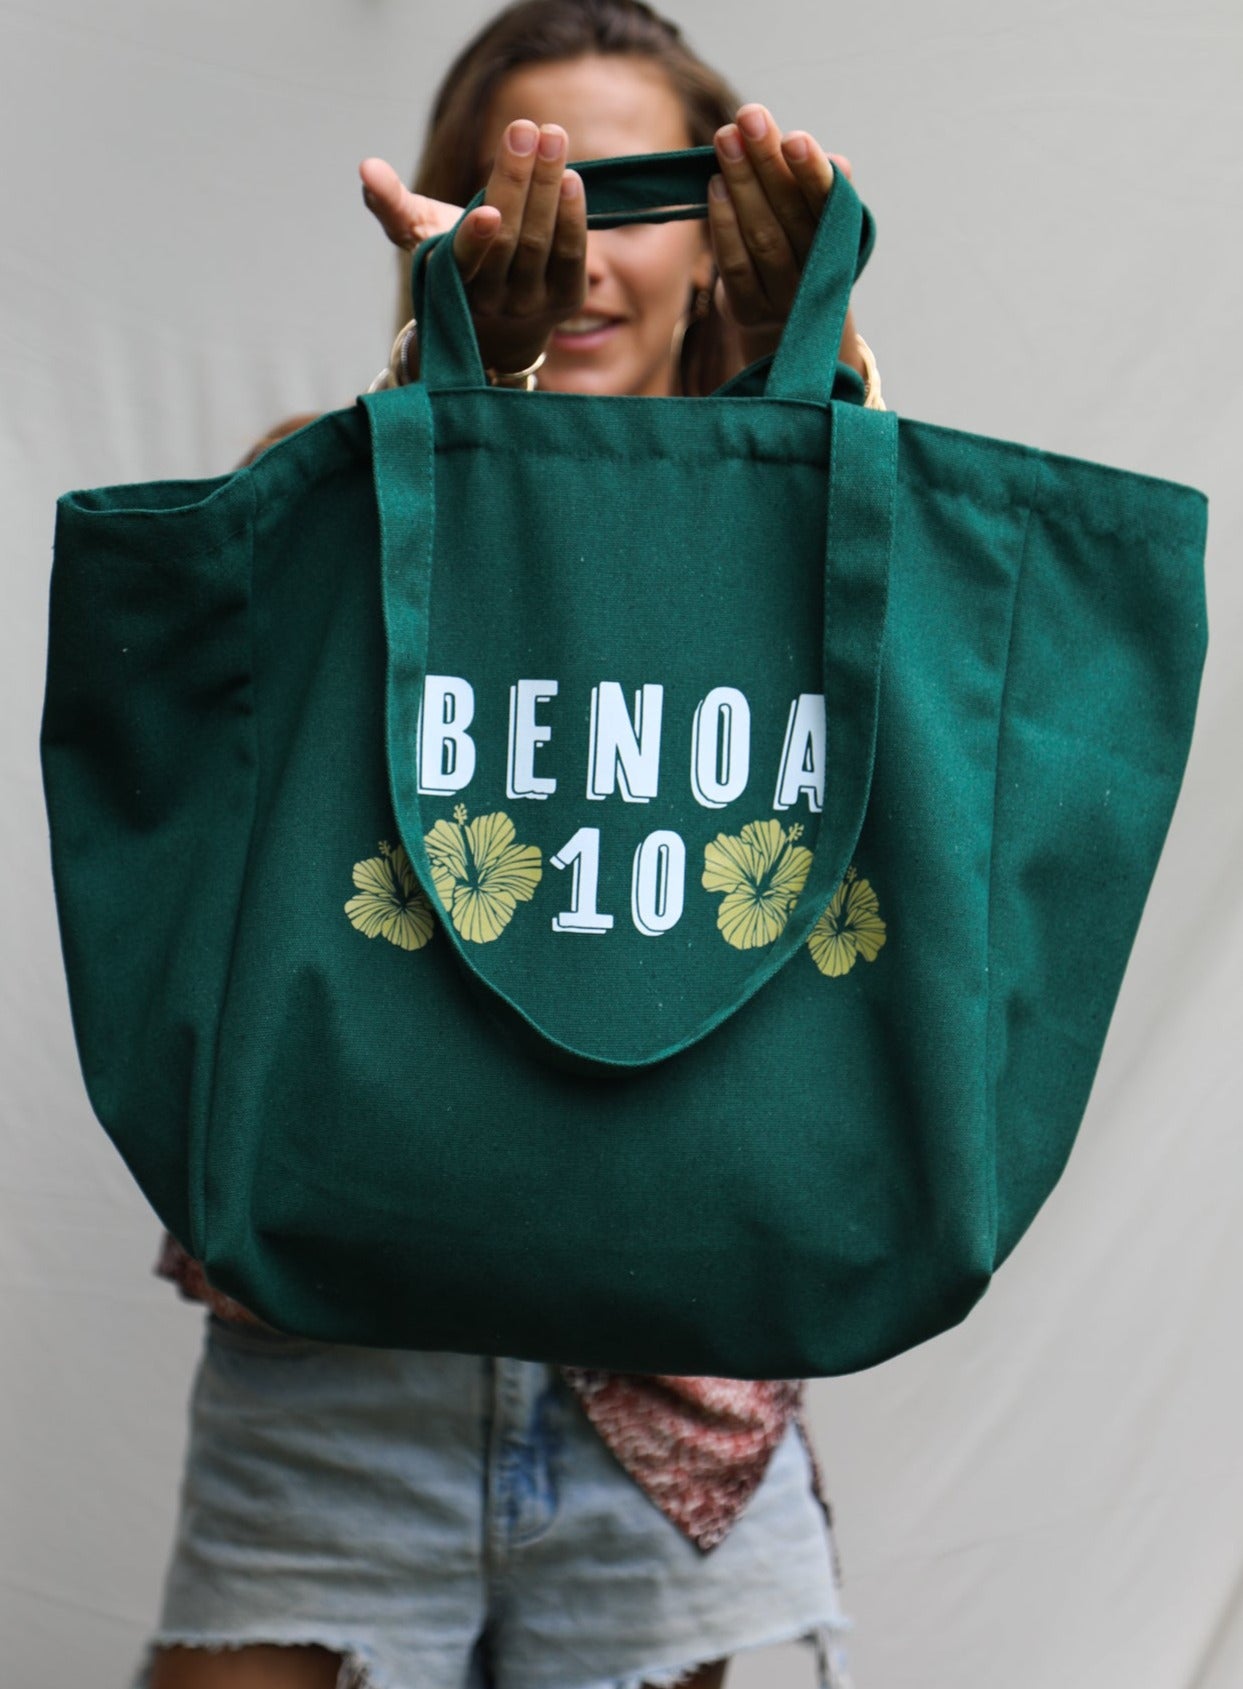 Bday Exclusive - "BENOA 10" Large Tote Bag